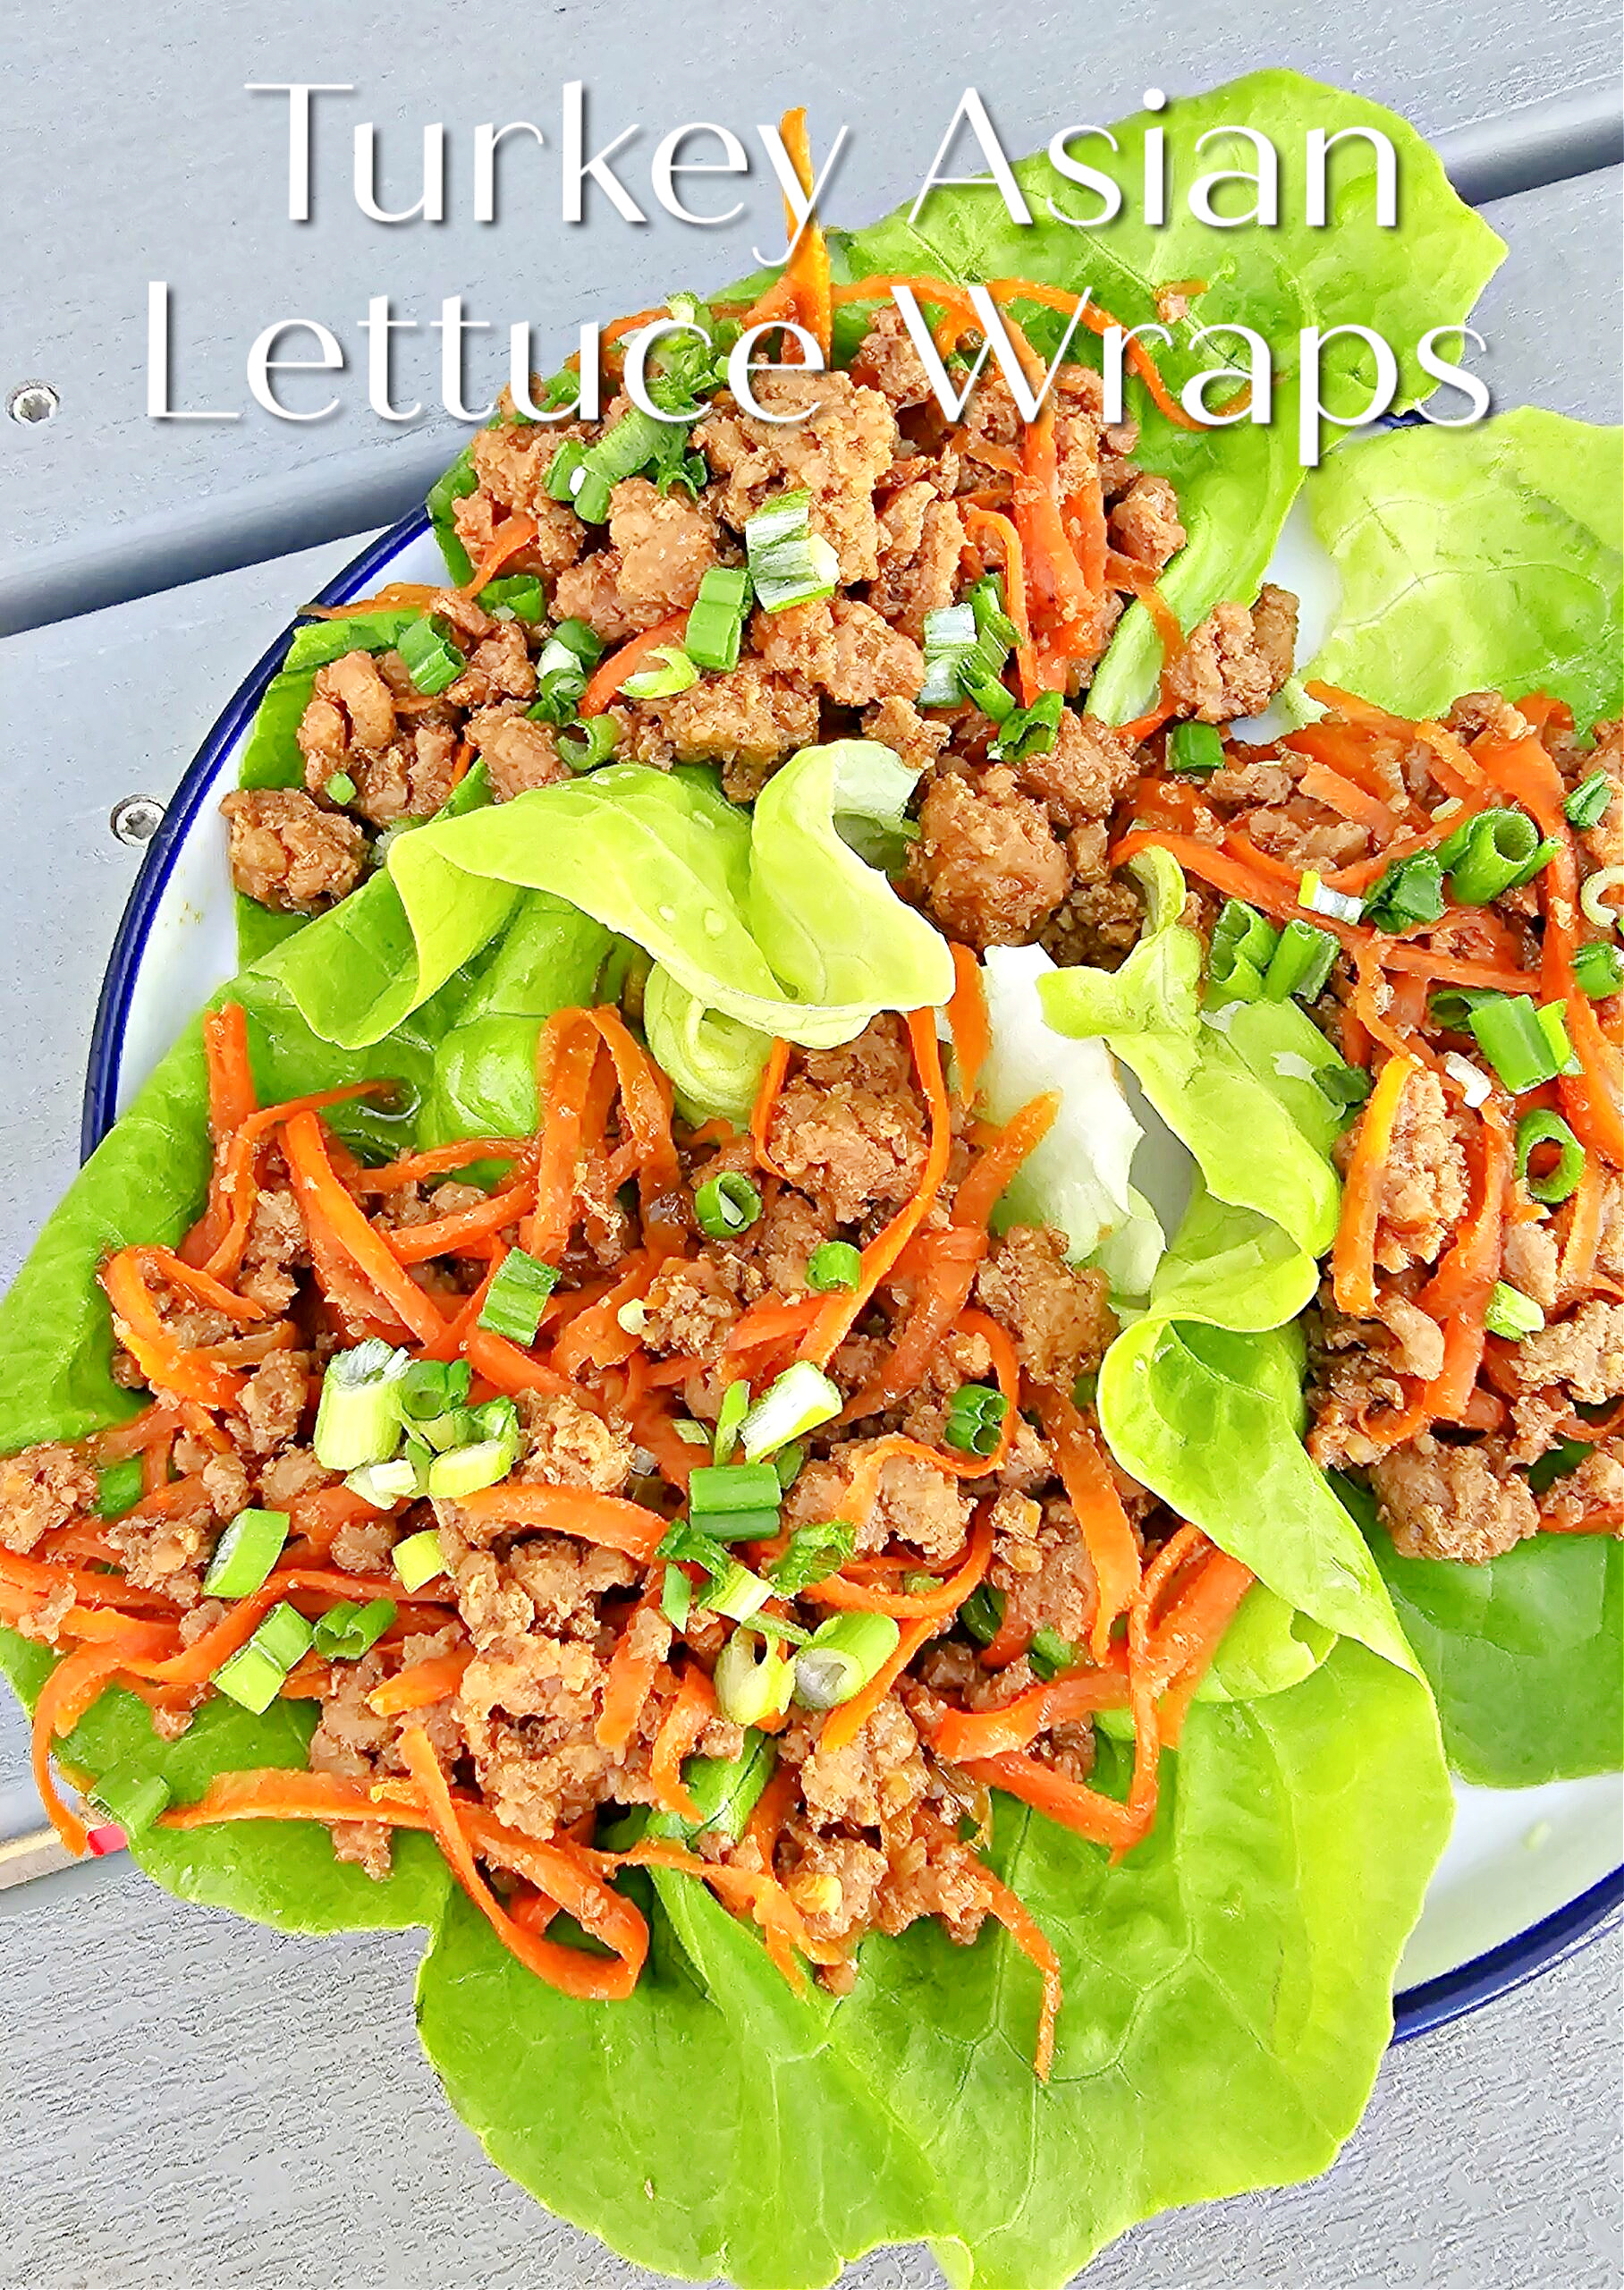 Turkey Asian Lettuce Wraps #lettucewrap #turkeyrecipe #healthyrecipe #ketorecipe #dinner #easyrecipe